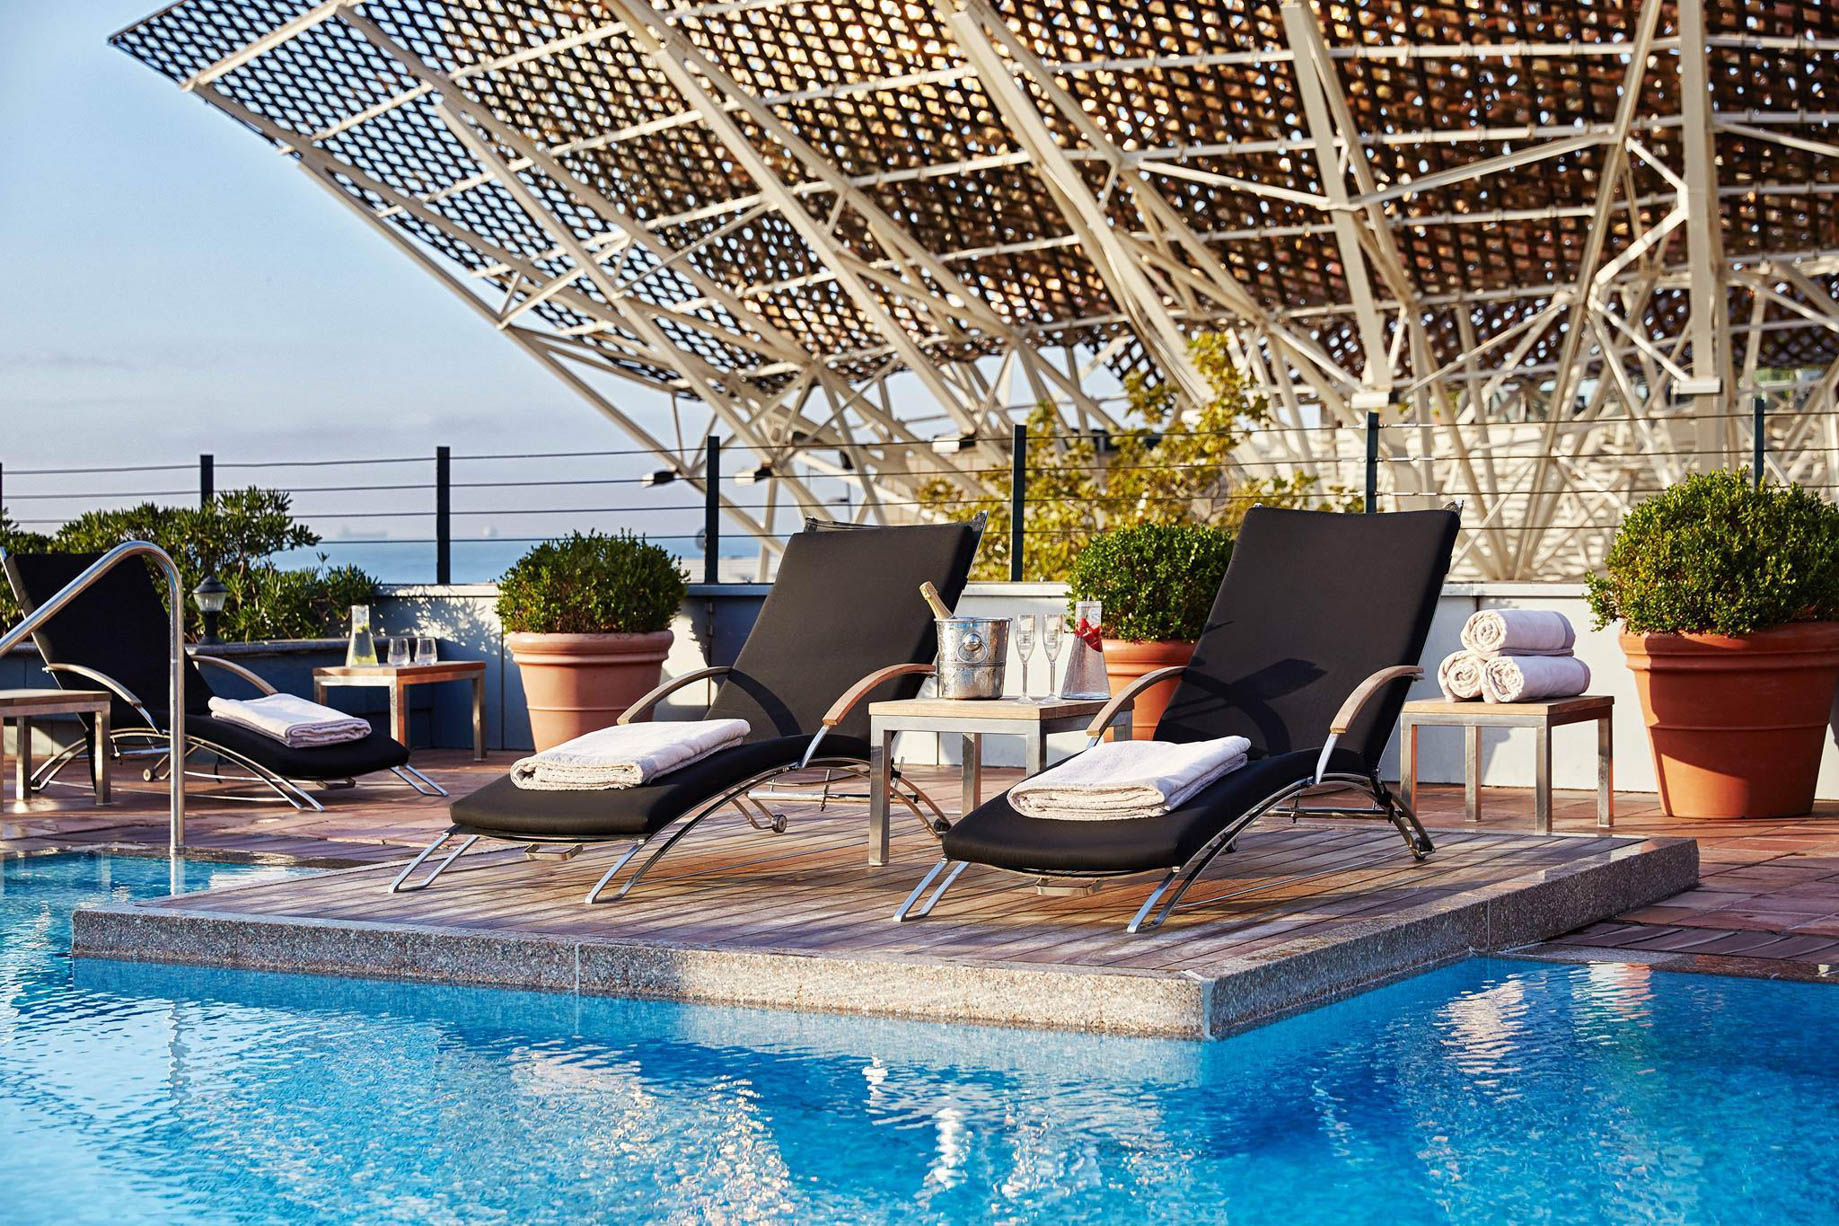 Hotel Arts Barcelona Ritz-Carlton – Barcelona, Spain – Exterior Pool Deck